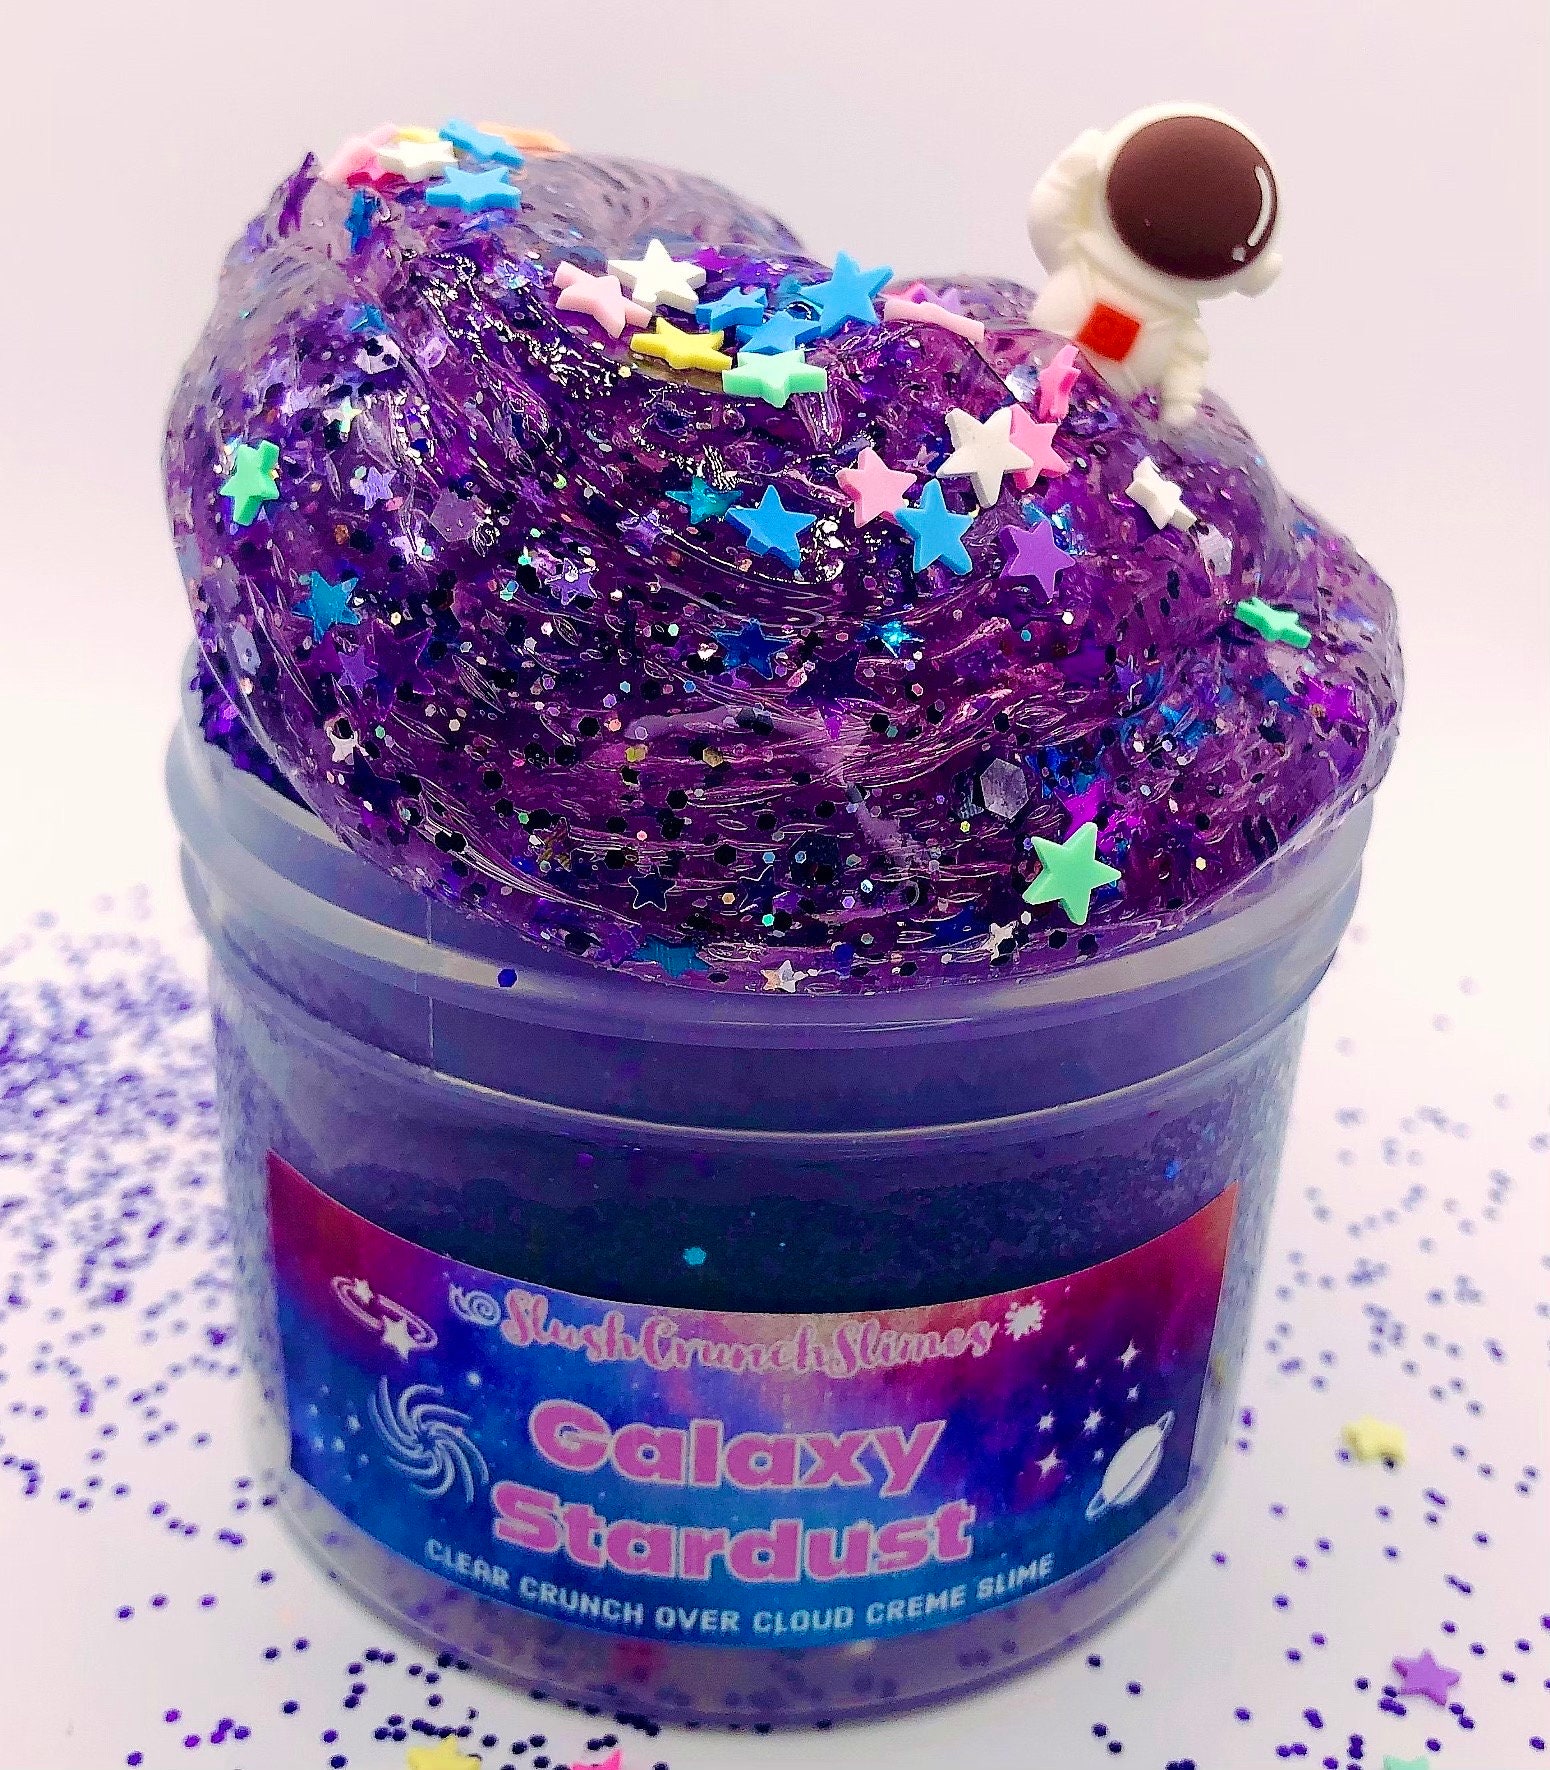 Original Stationery Galaxy Slime Kit, Fun Slime Set with Glow in The Dark  Stickers, Dark Powder to Make Glitter & Galactic Slime!